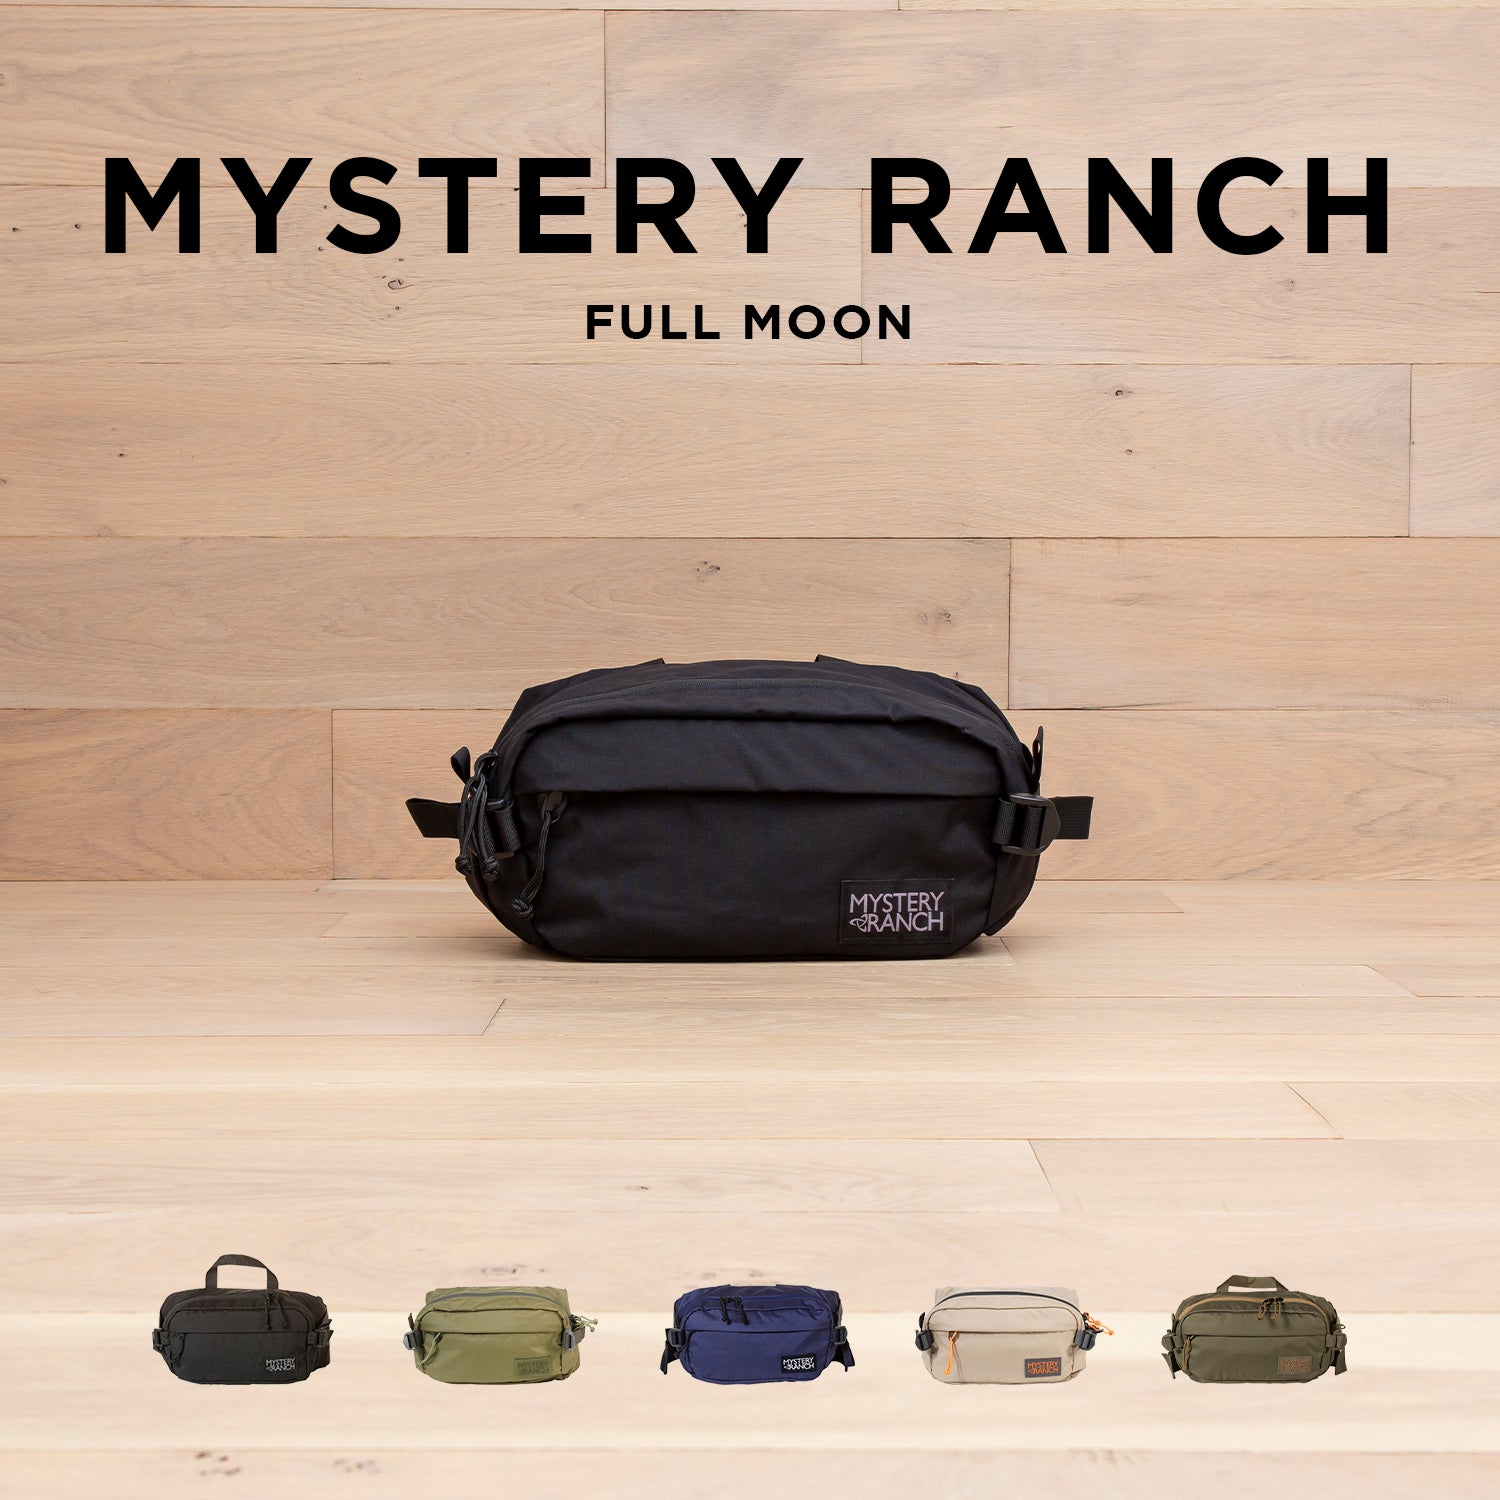 Mystery Ranch Full Moon.